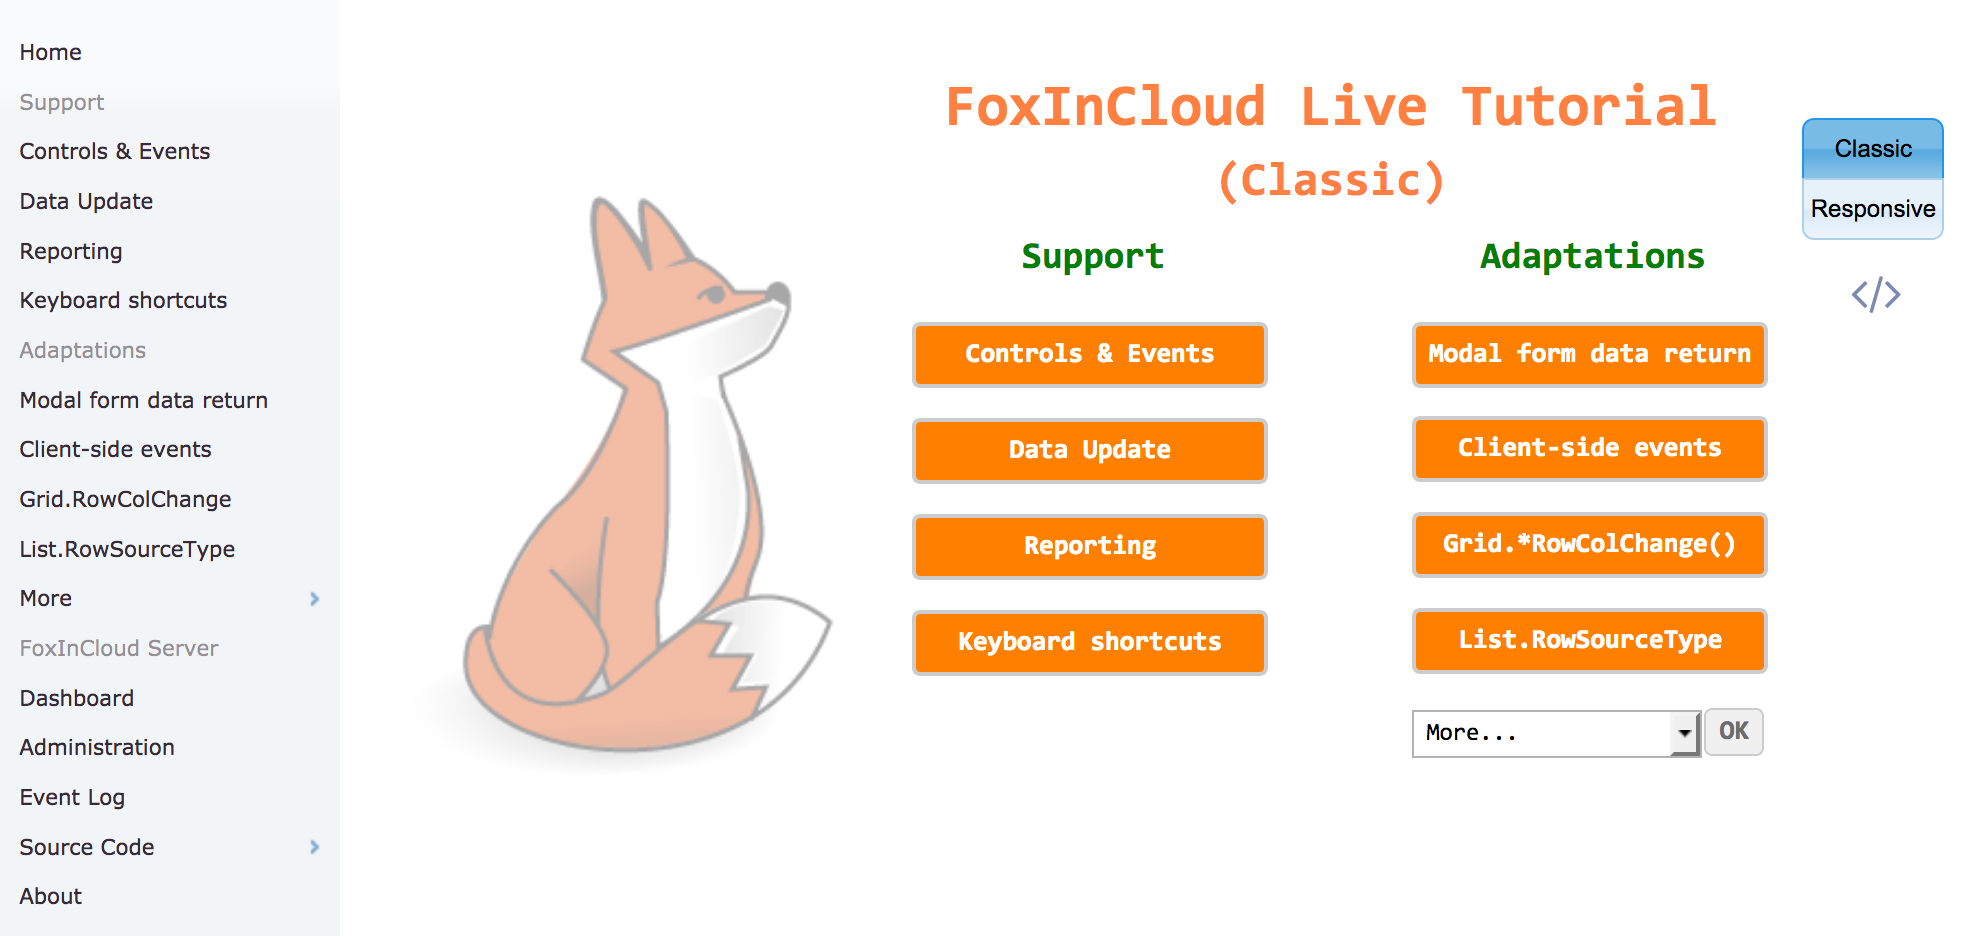 FoxInCloud Live Tutorial home, classic mode